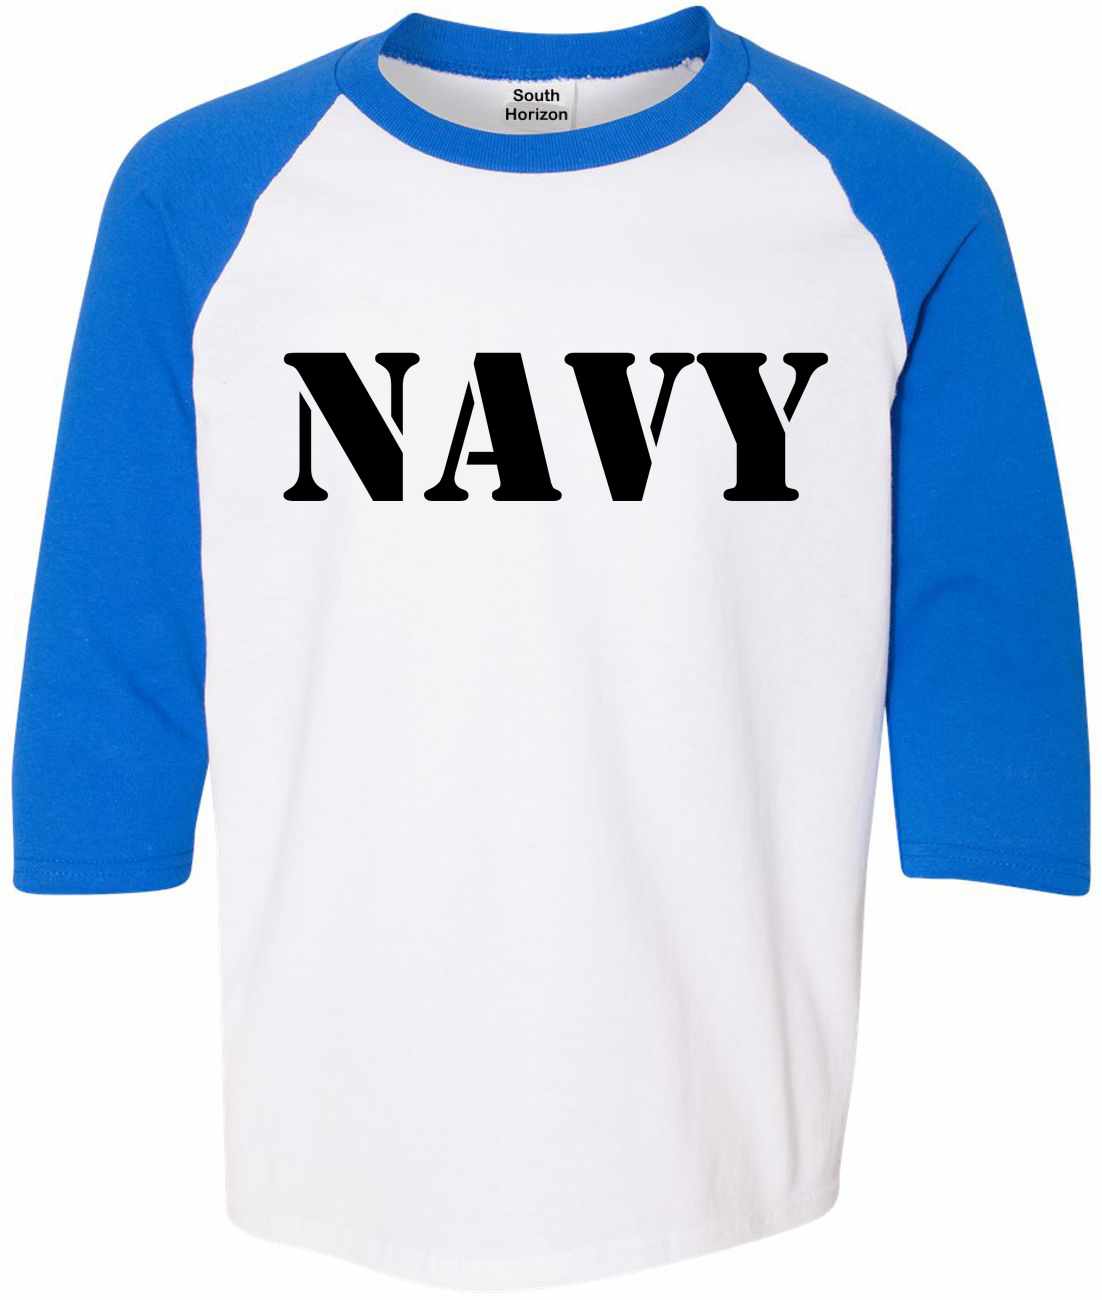 NAVY on Youth Baseball Shirt (#346-212)